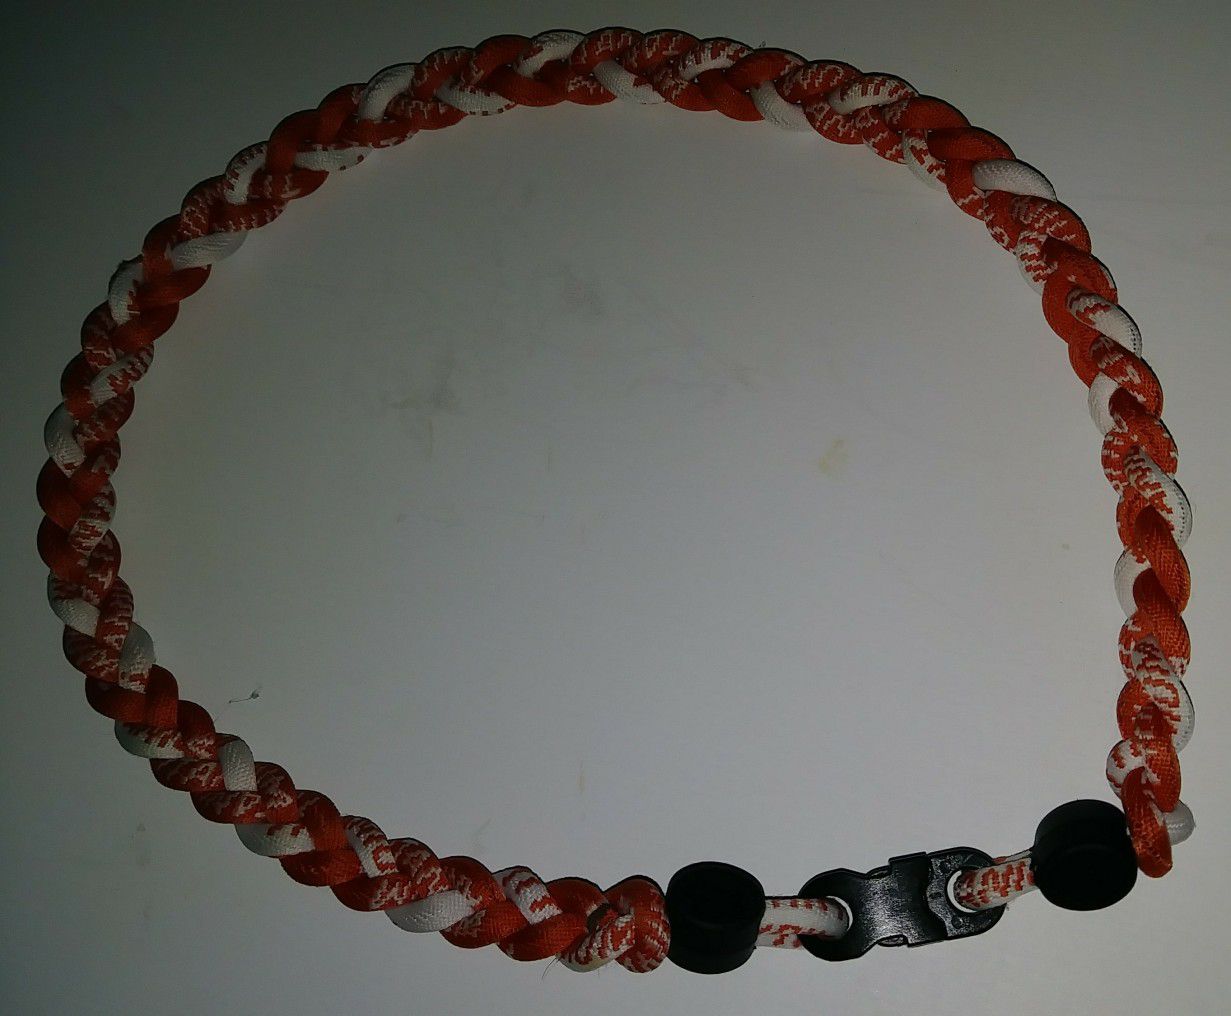 New orange and black energy necklace